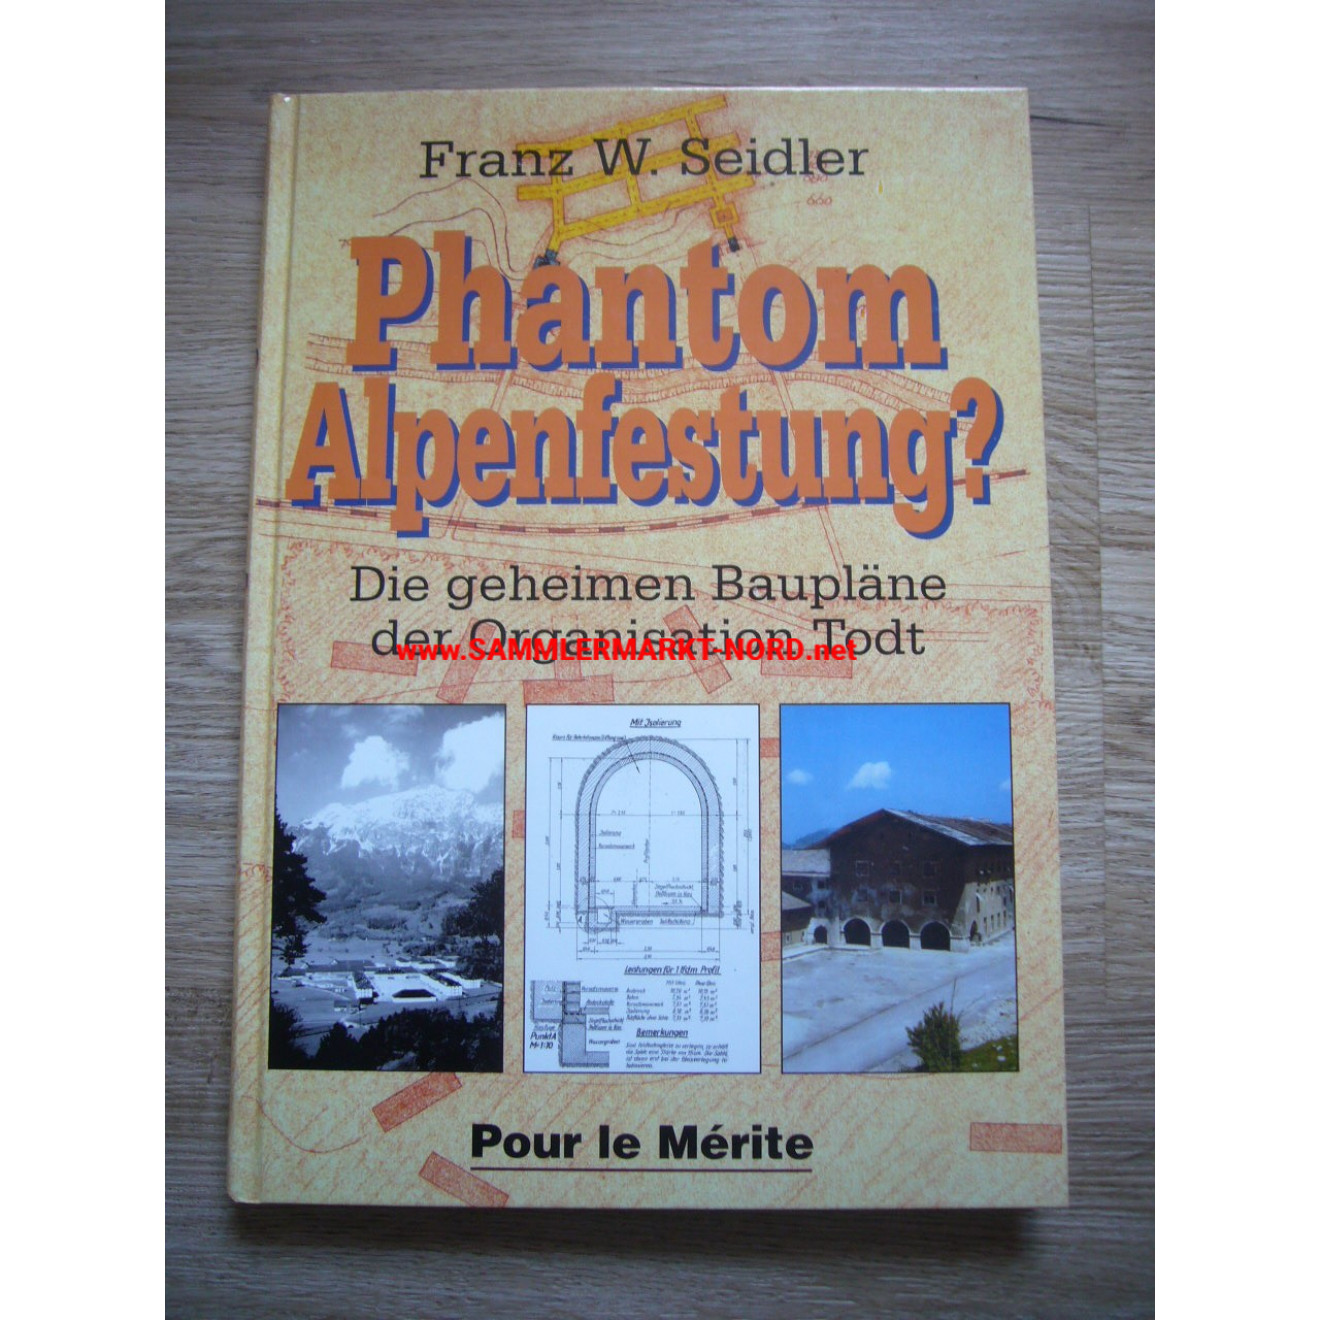 Phantom Alpine fortress? - The secret construction plans of the OT